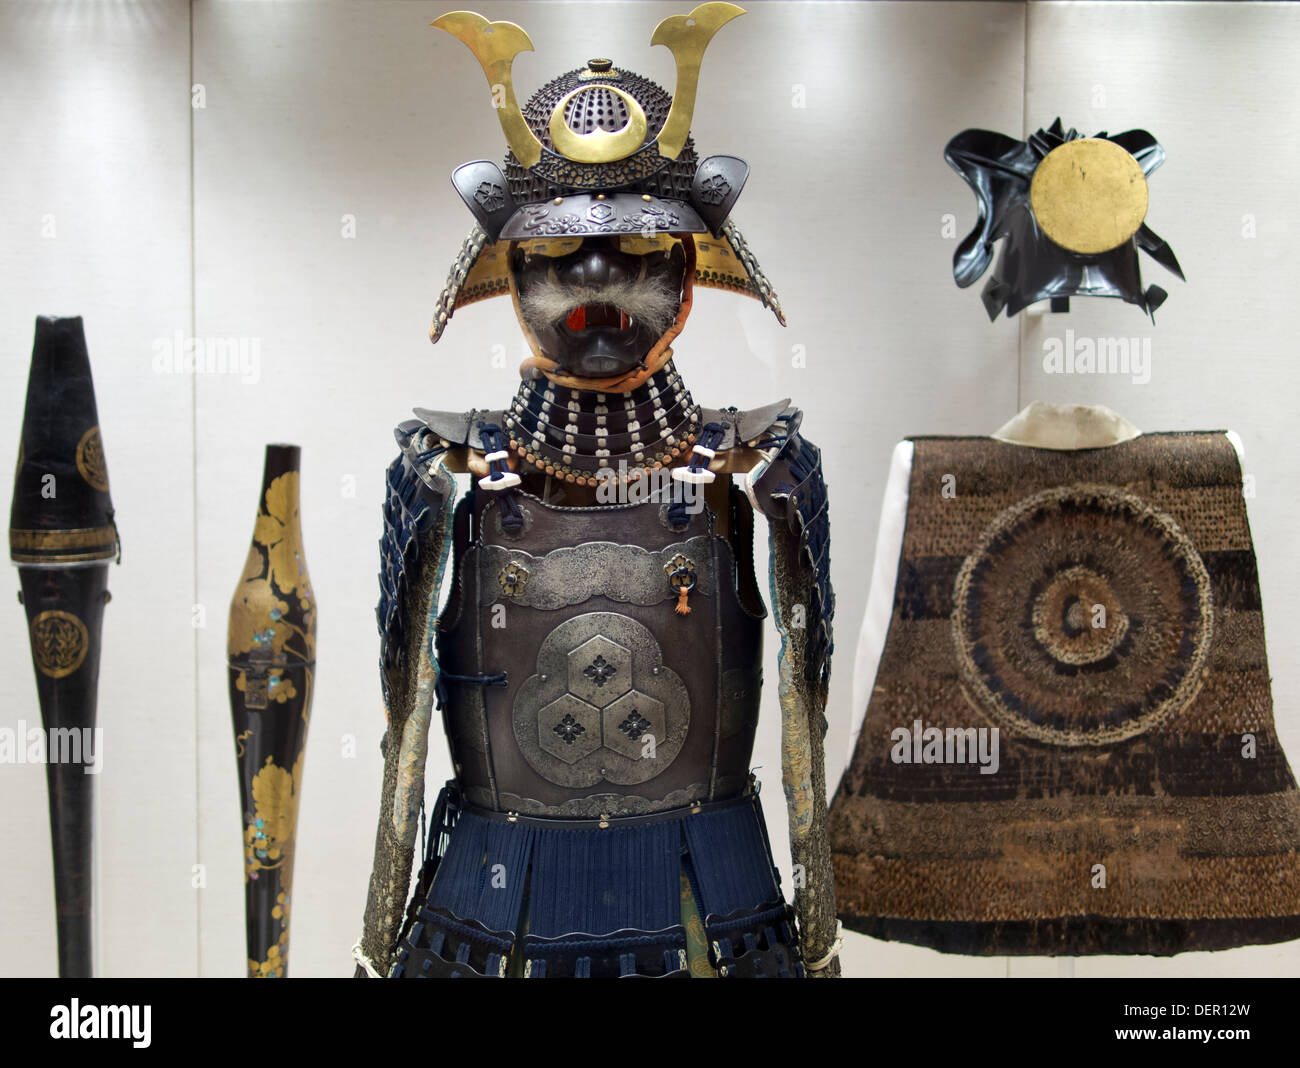 The British Museum, London - fearsome samurai armour and katana 3 Stock Photo